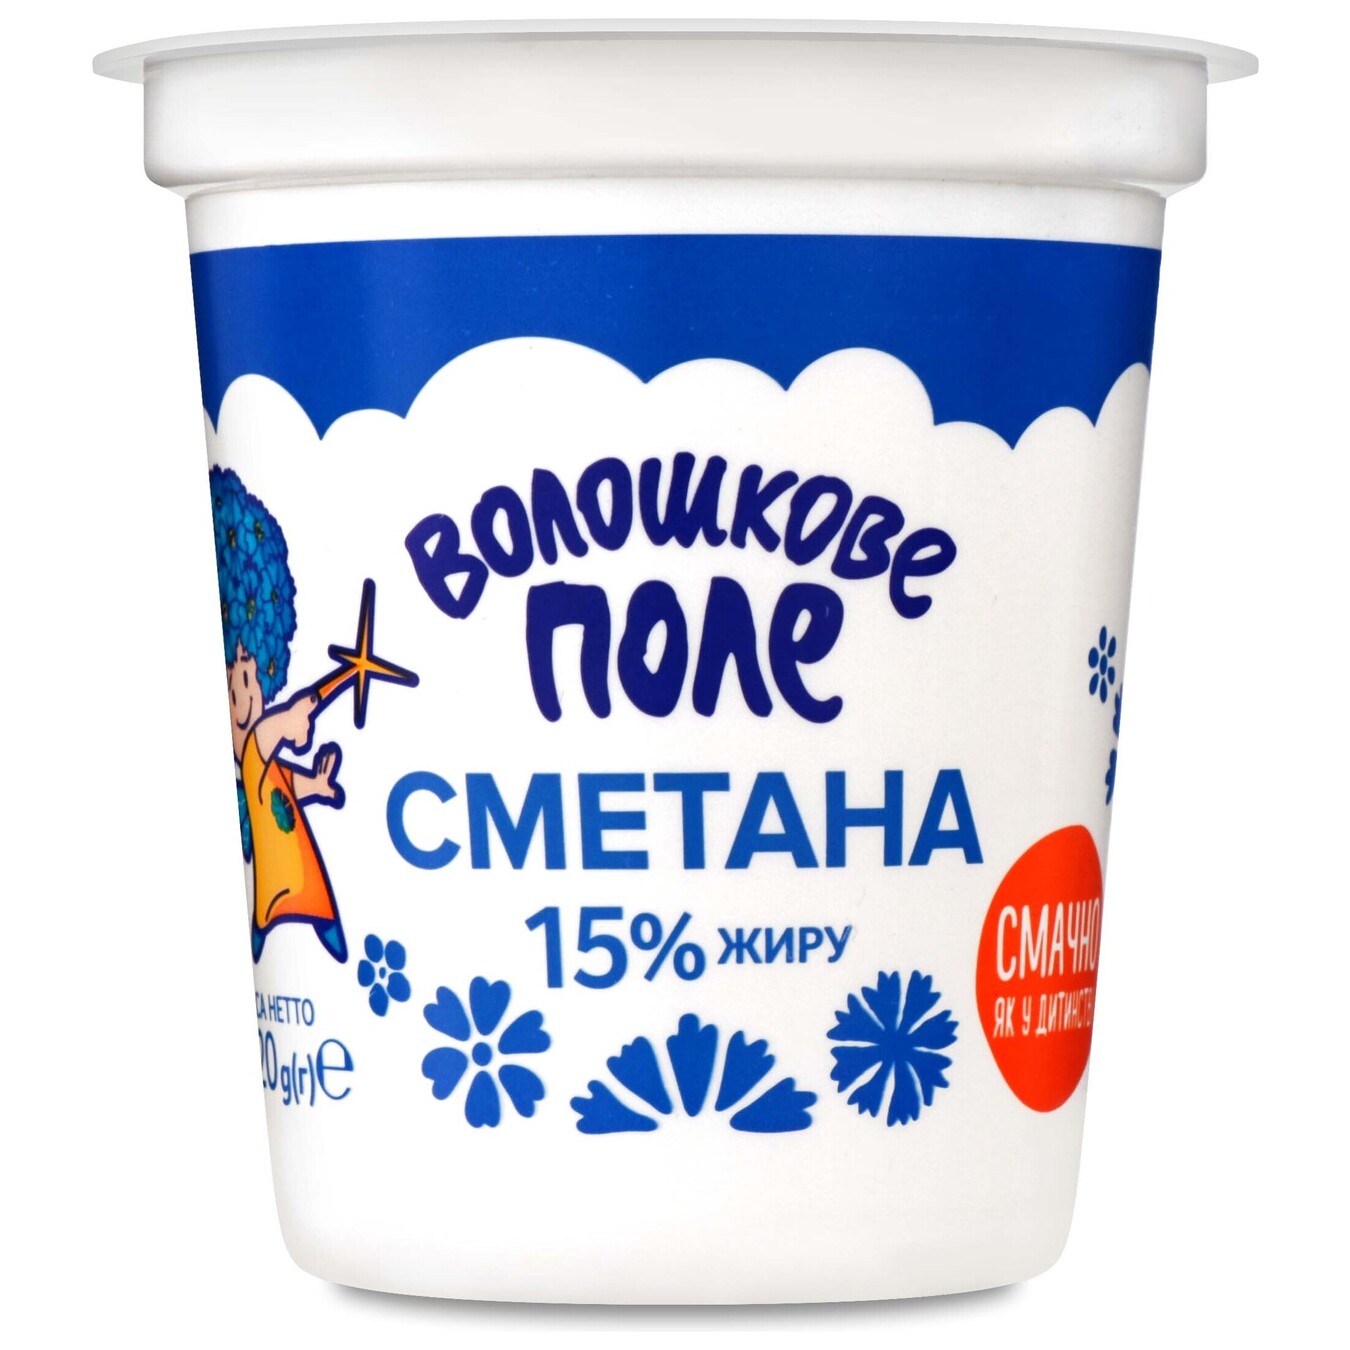 Voloshkove Pole Sour Cream 15% glass 320g